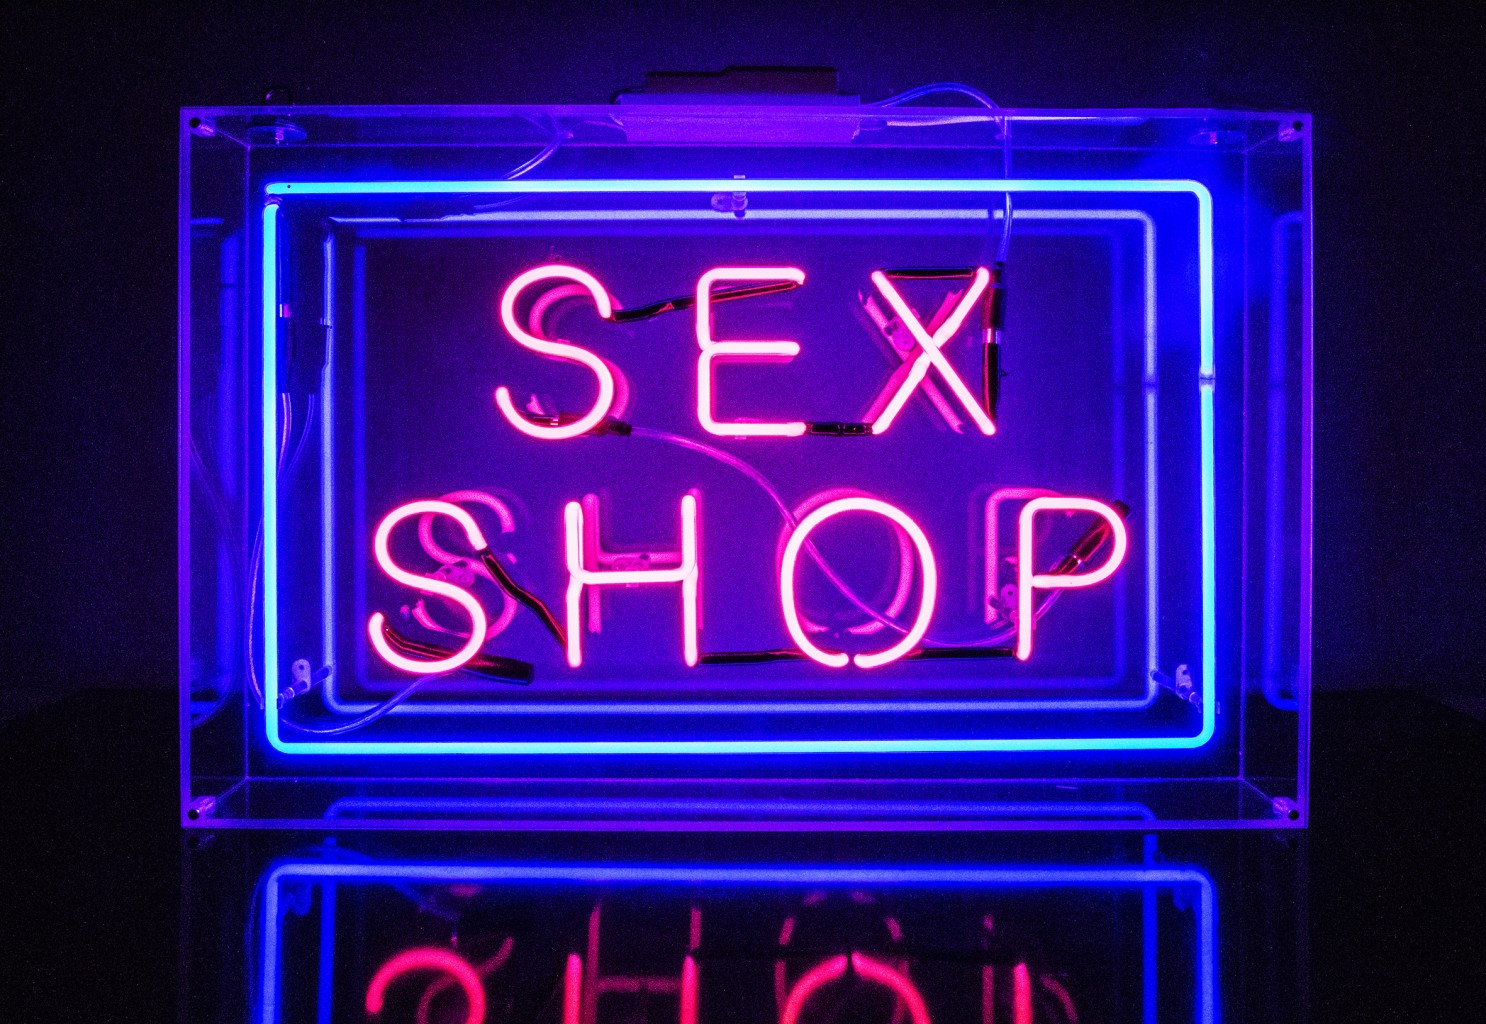 http://www.kemplondon.com/wp-content/uploads/2016/04/kemp_london_hire_sex-shop1-1486x1024.jpg